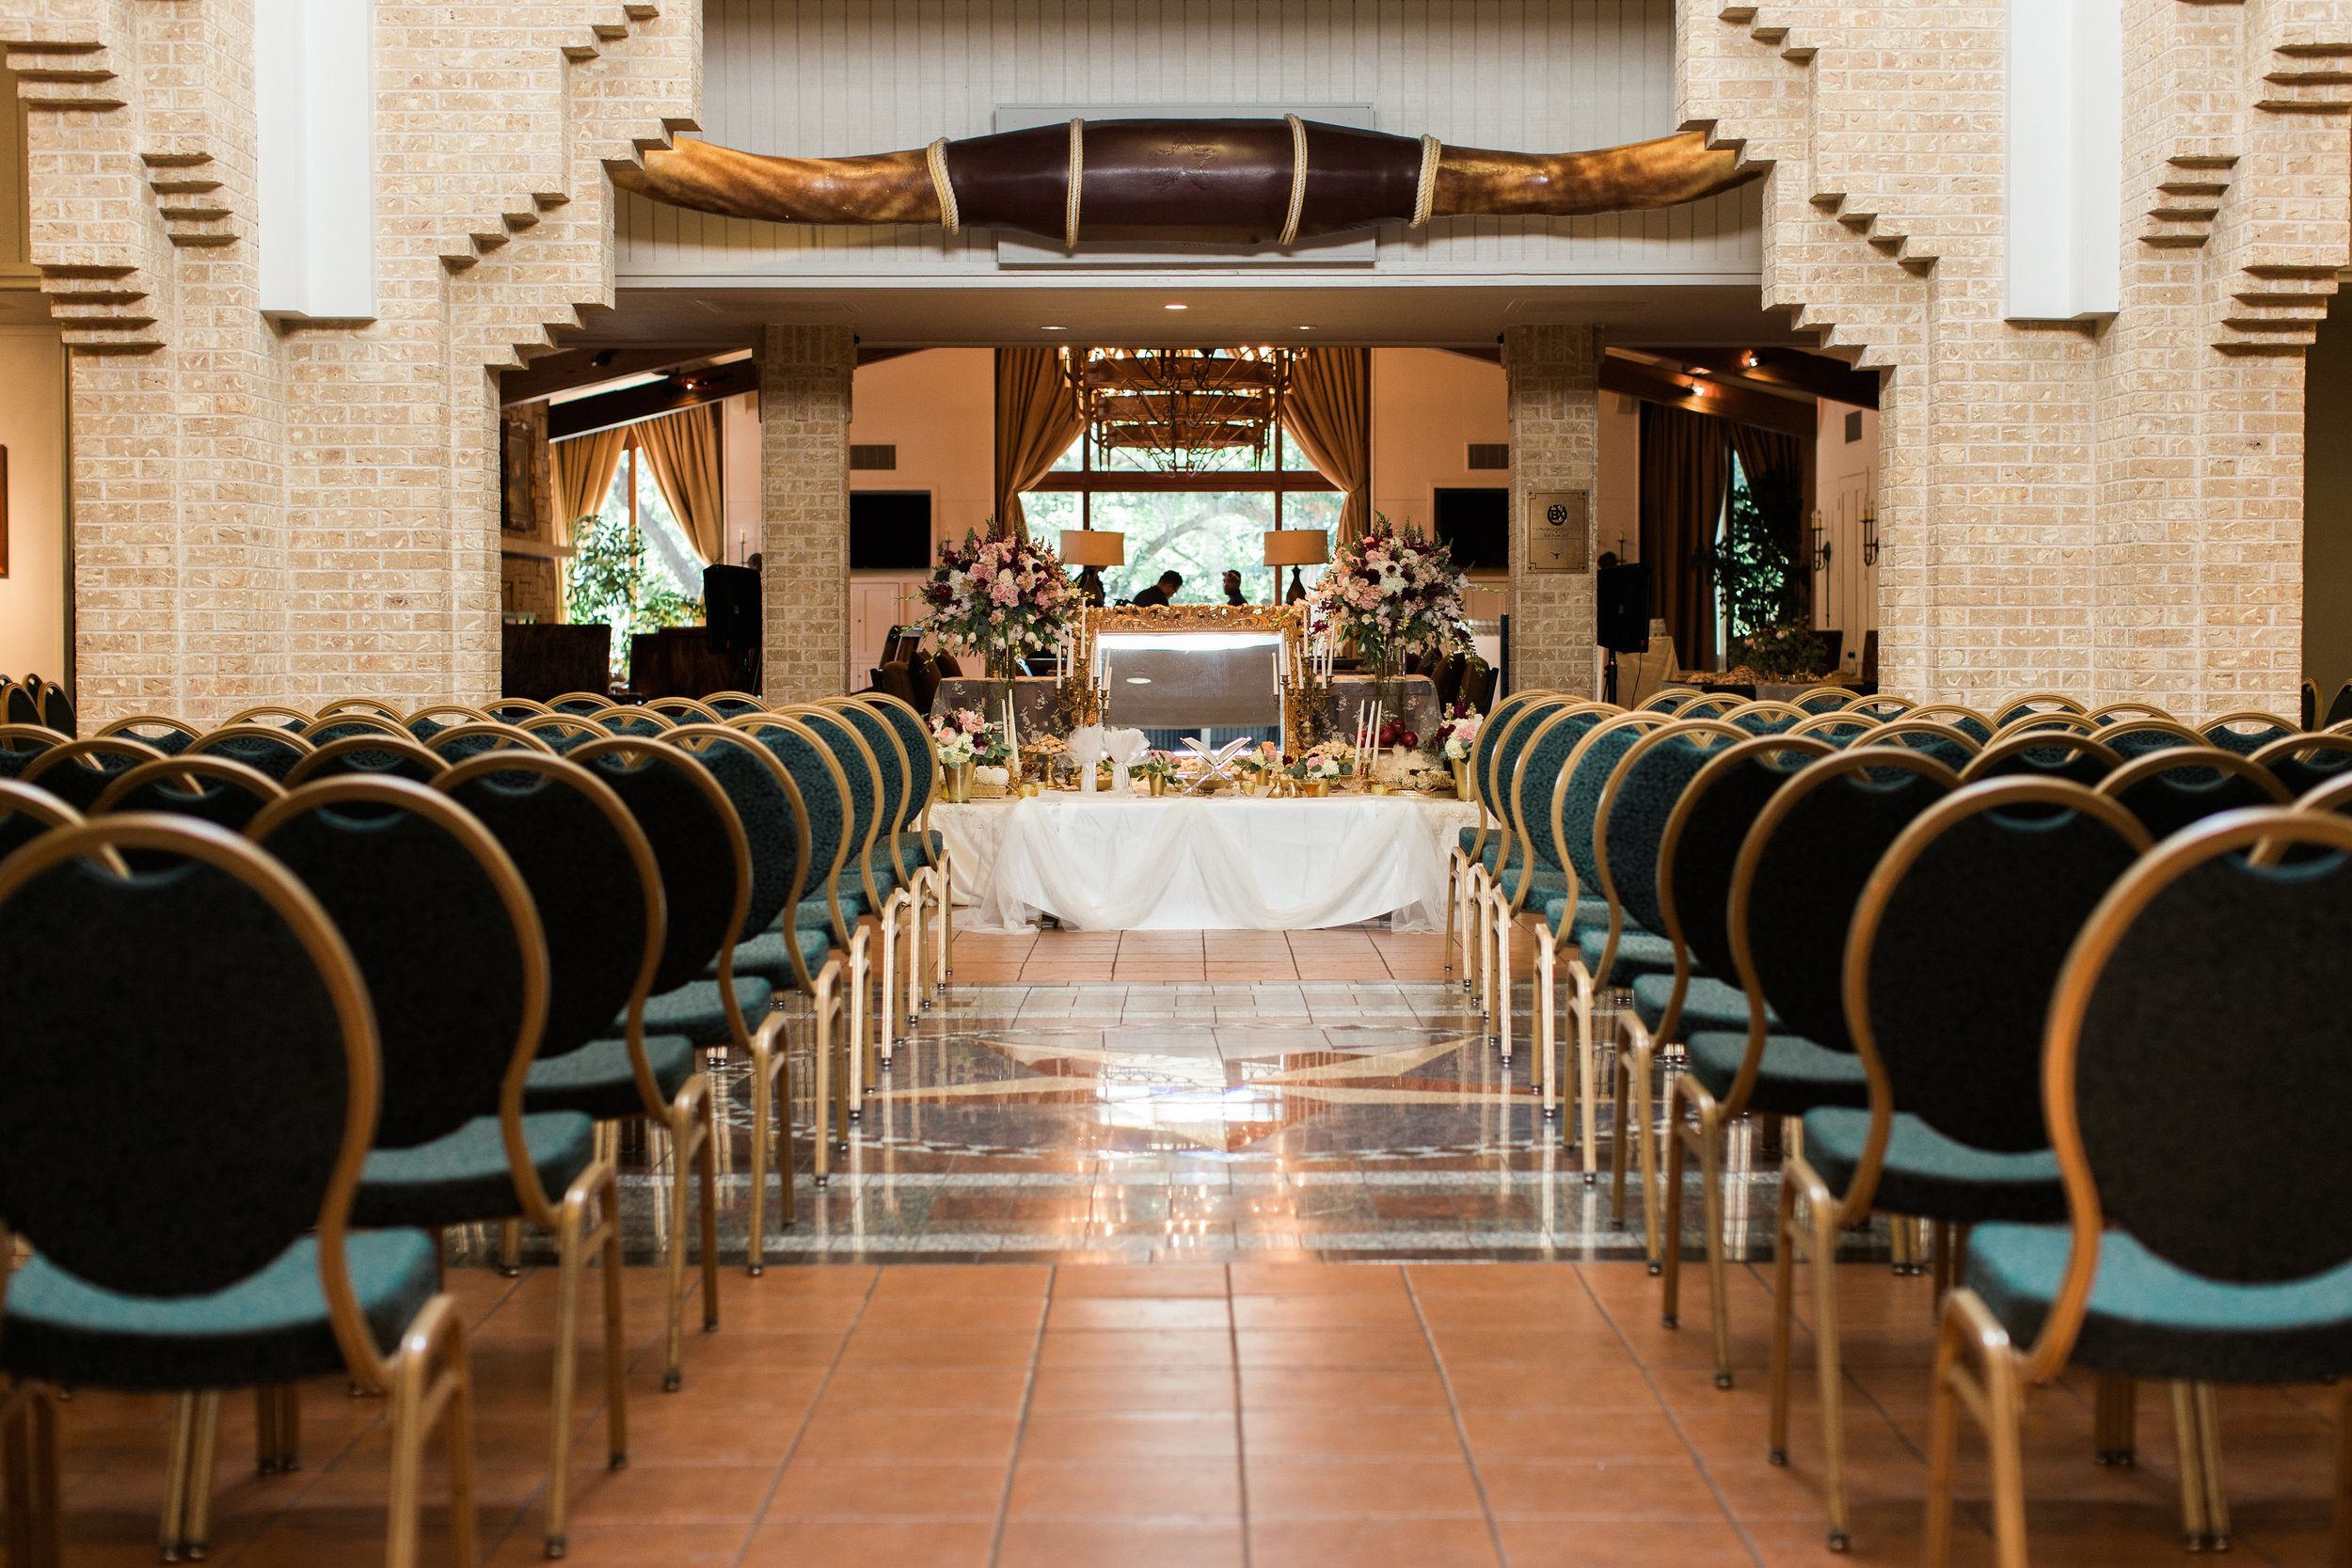  indoor ceremony rain plan for Jewish wedding 